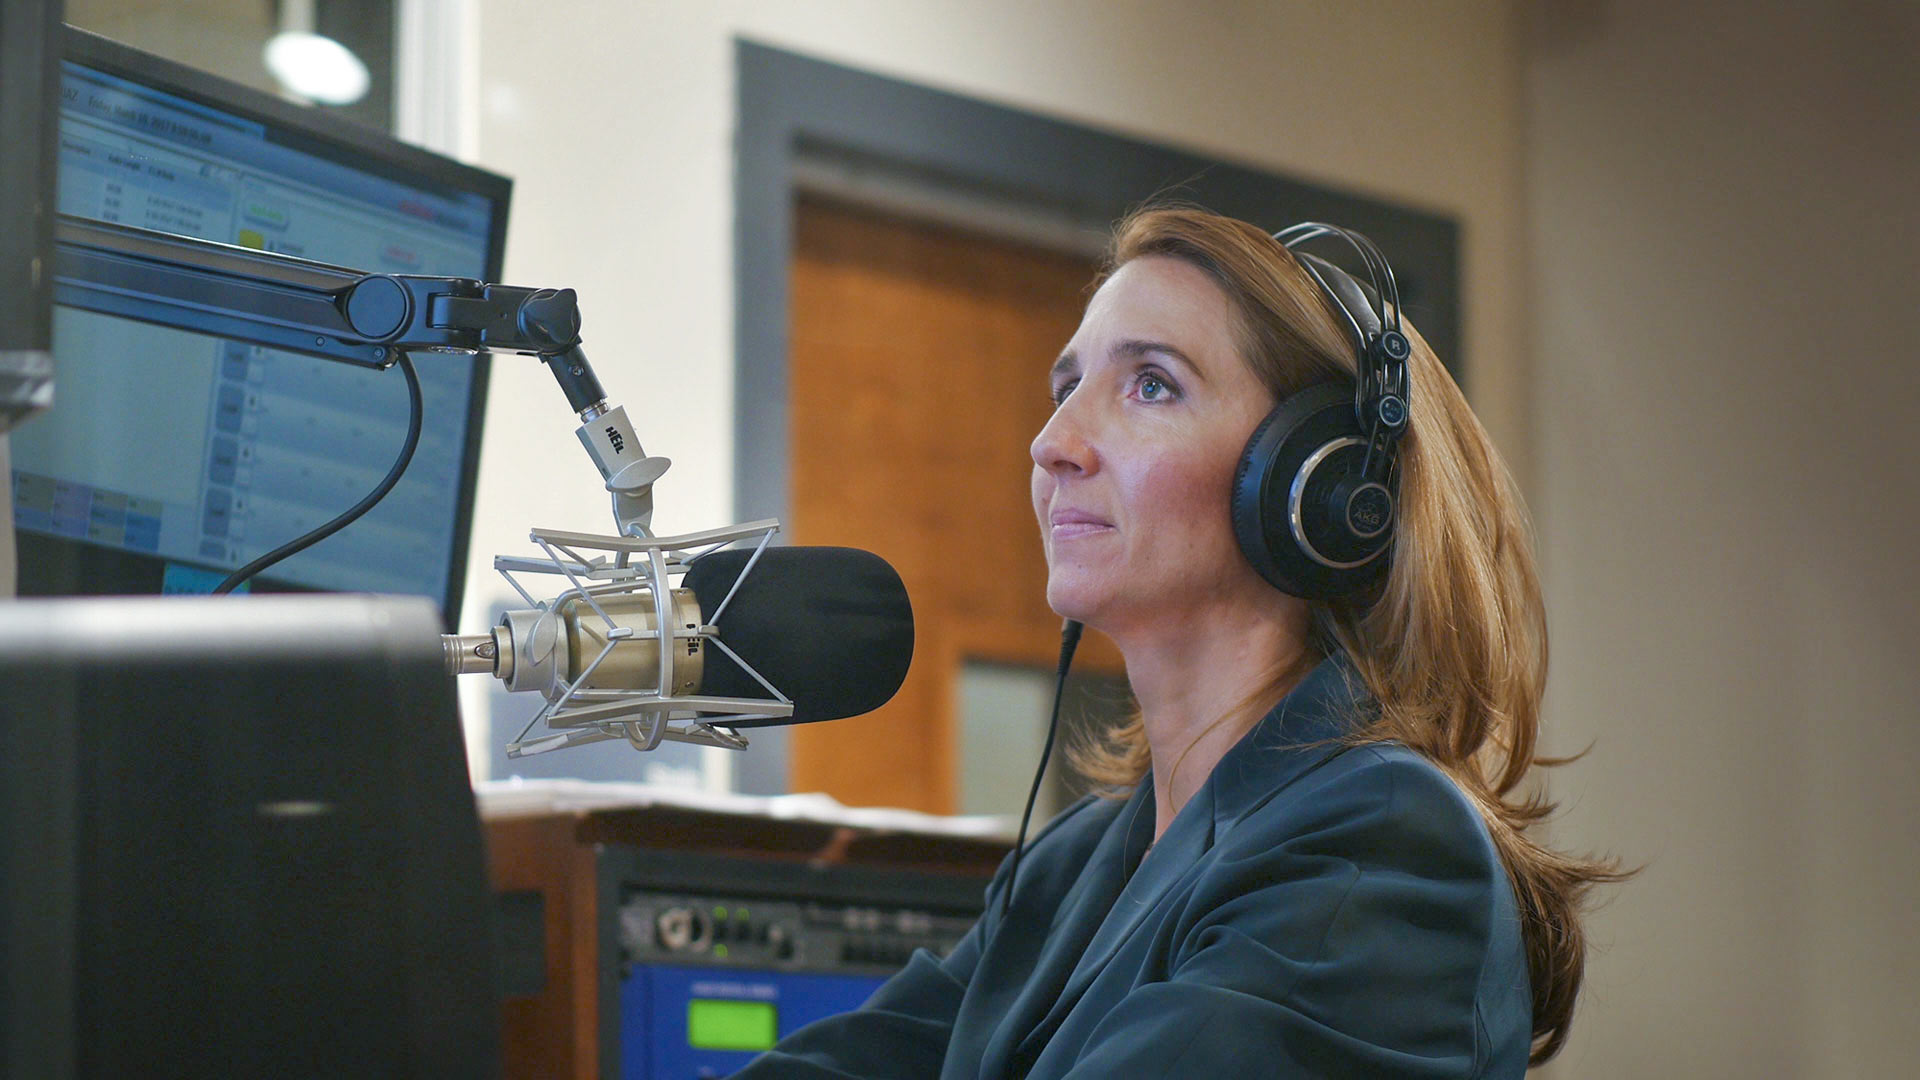 NPR 89.1 Morning Announcer, Nicole Cox on the air.